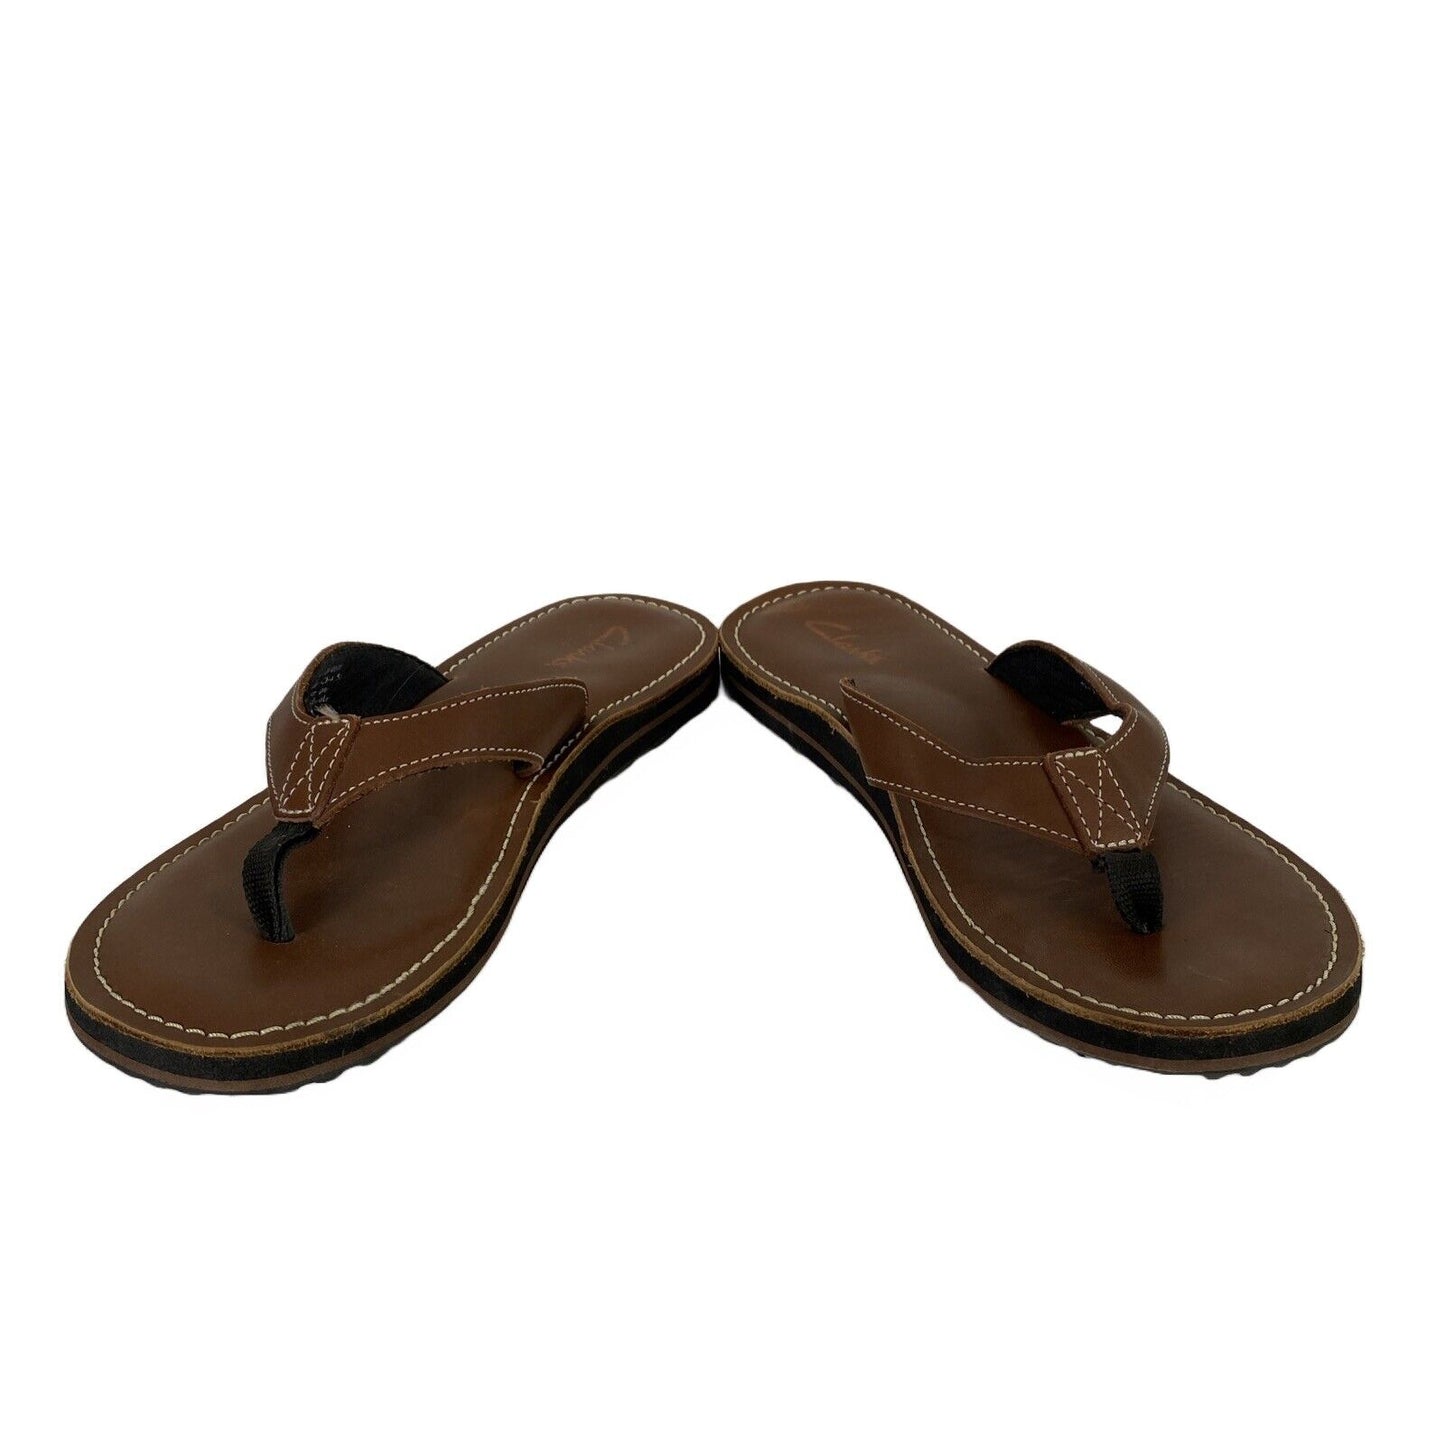 Clarks Women's Brown Leather Thong Flip Flops - 10